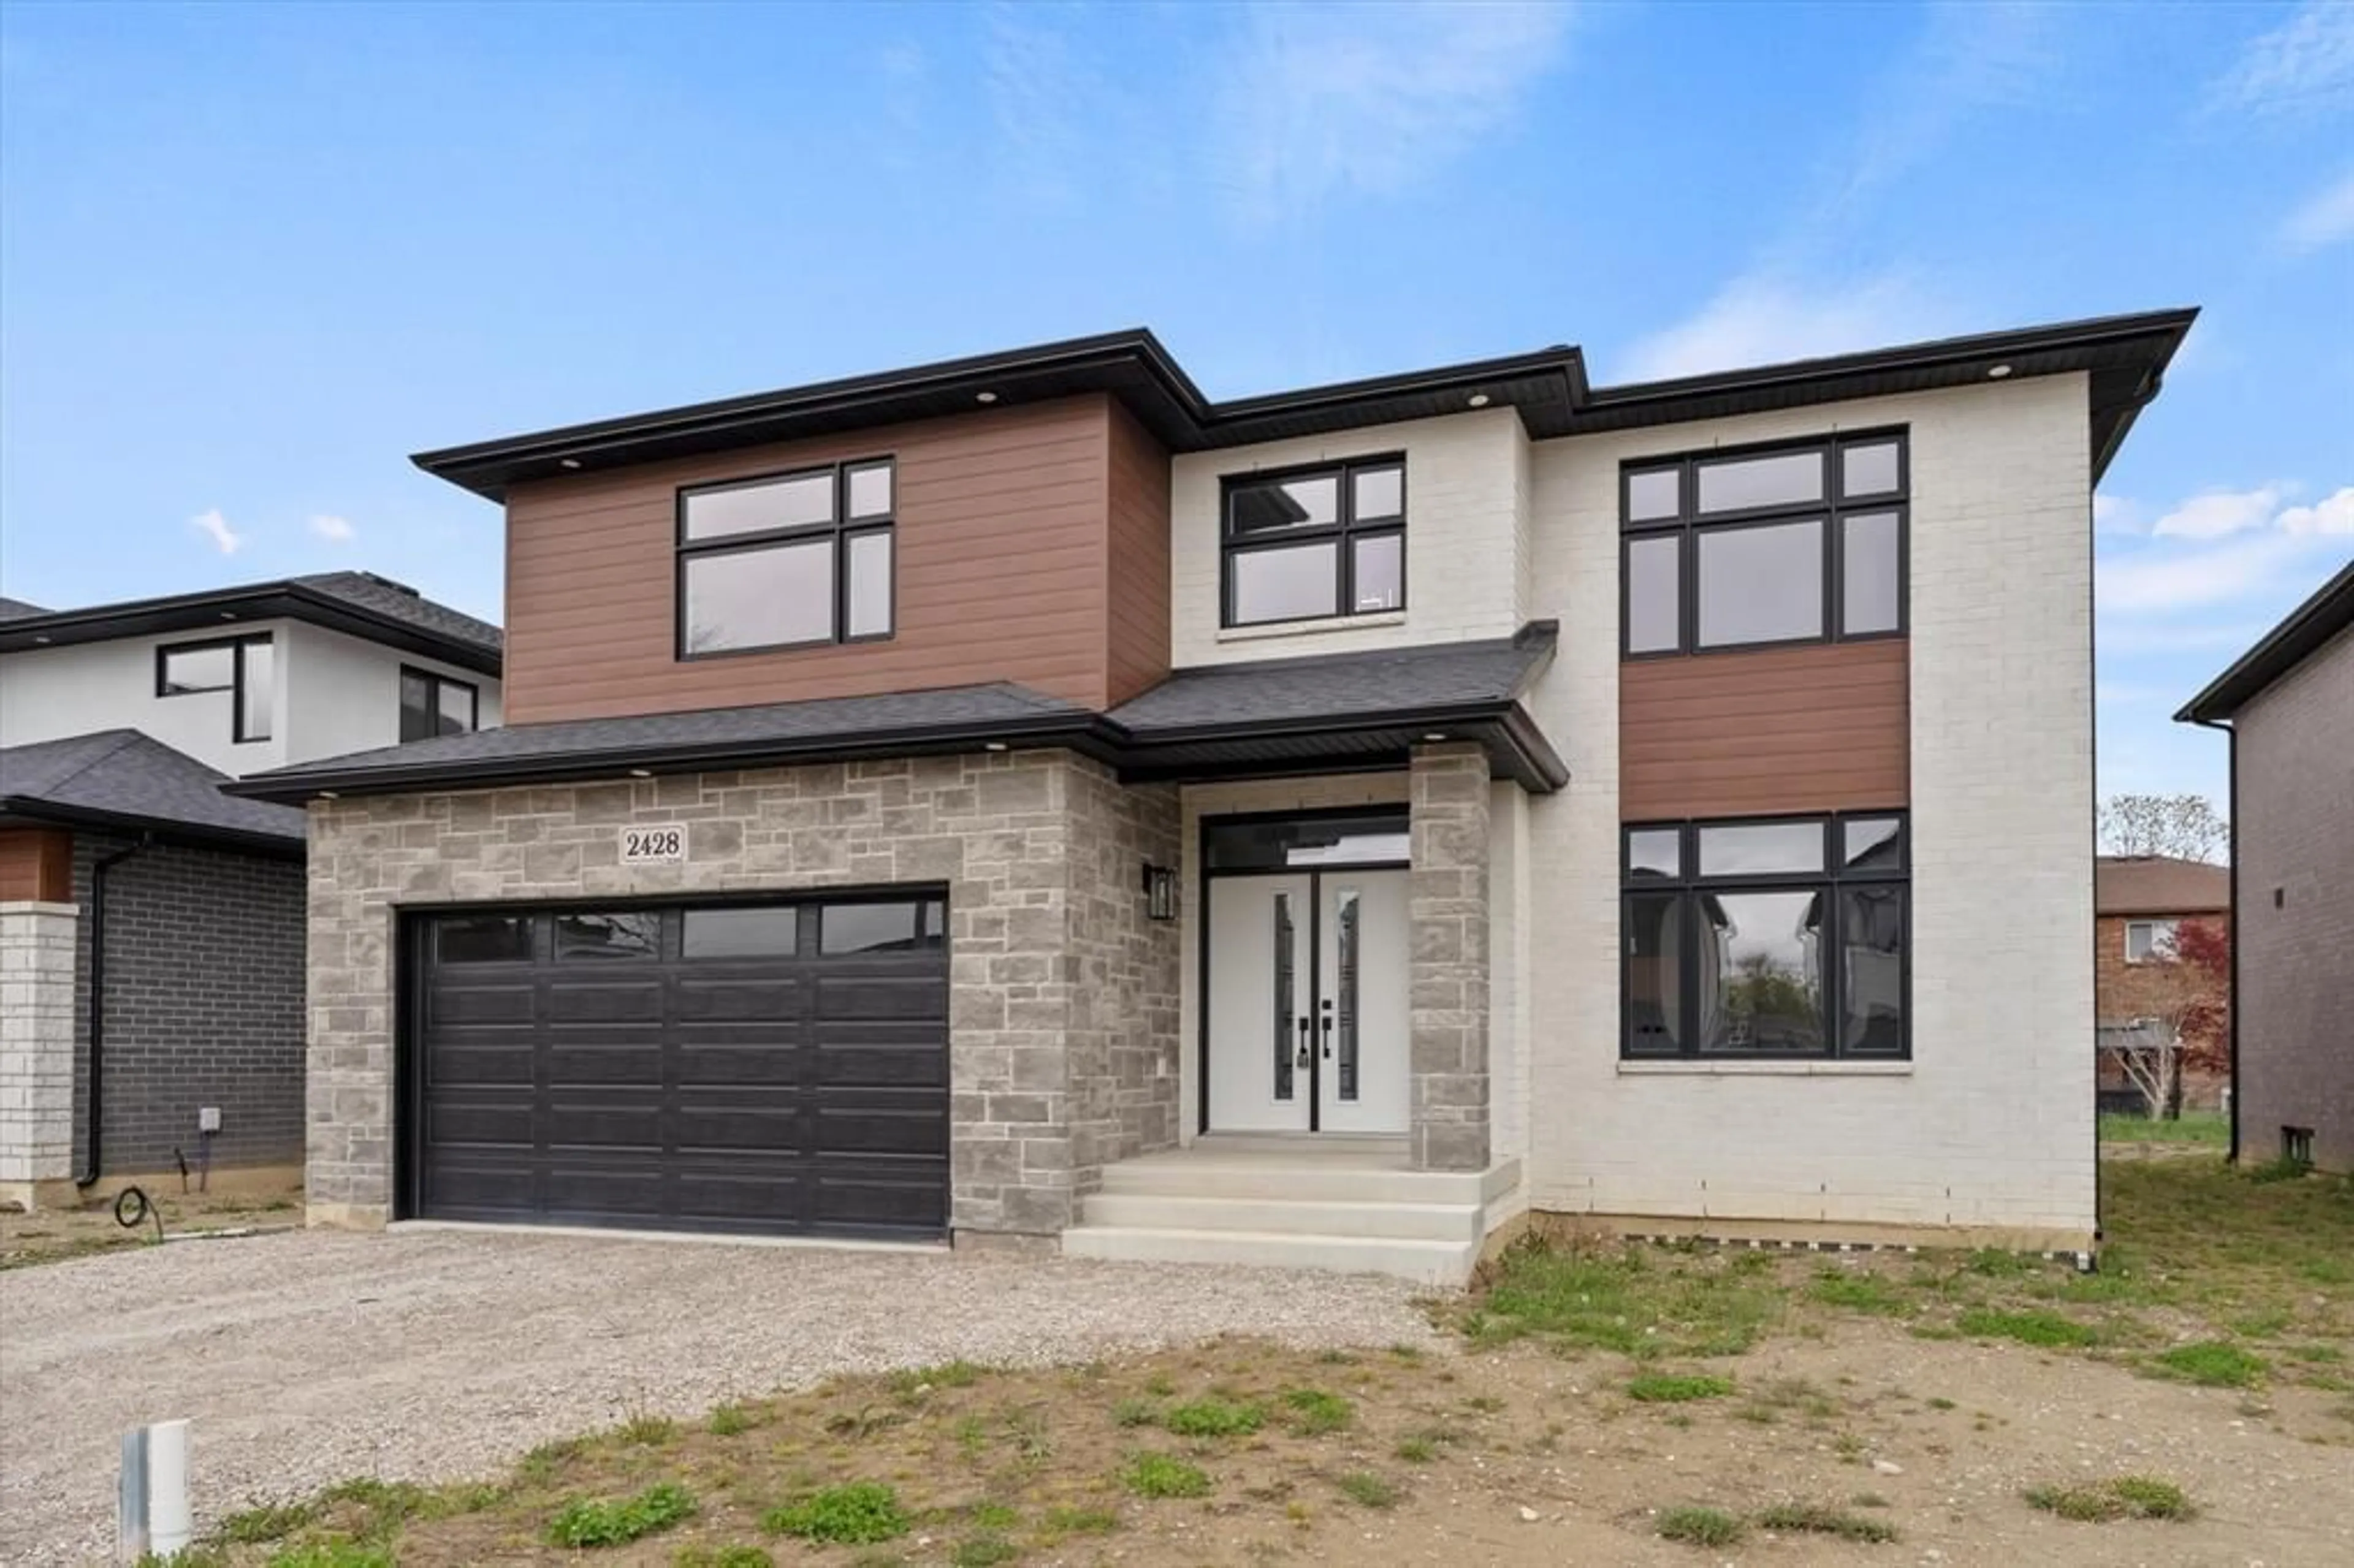 Home with brick exterior material for 2428 Roxborough, Windsor Ontario N9E 2Z8